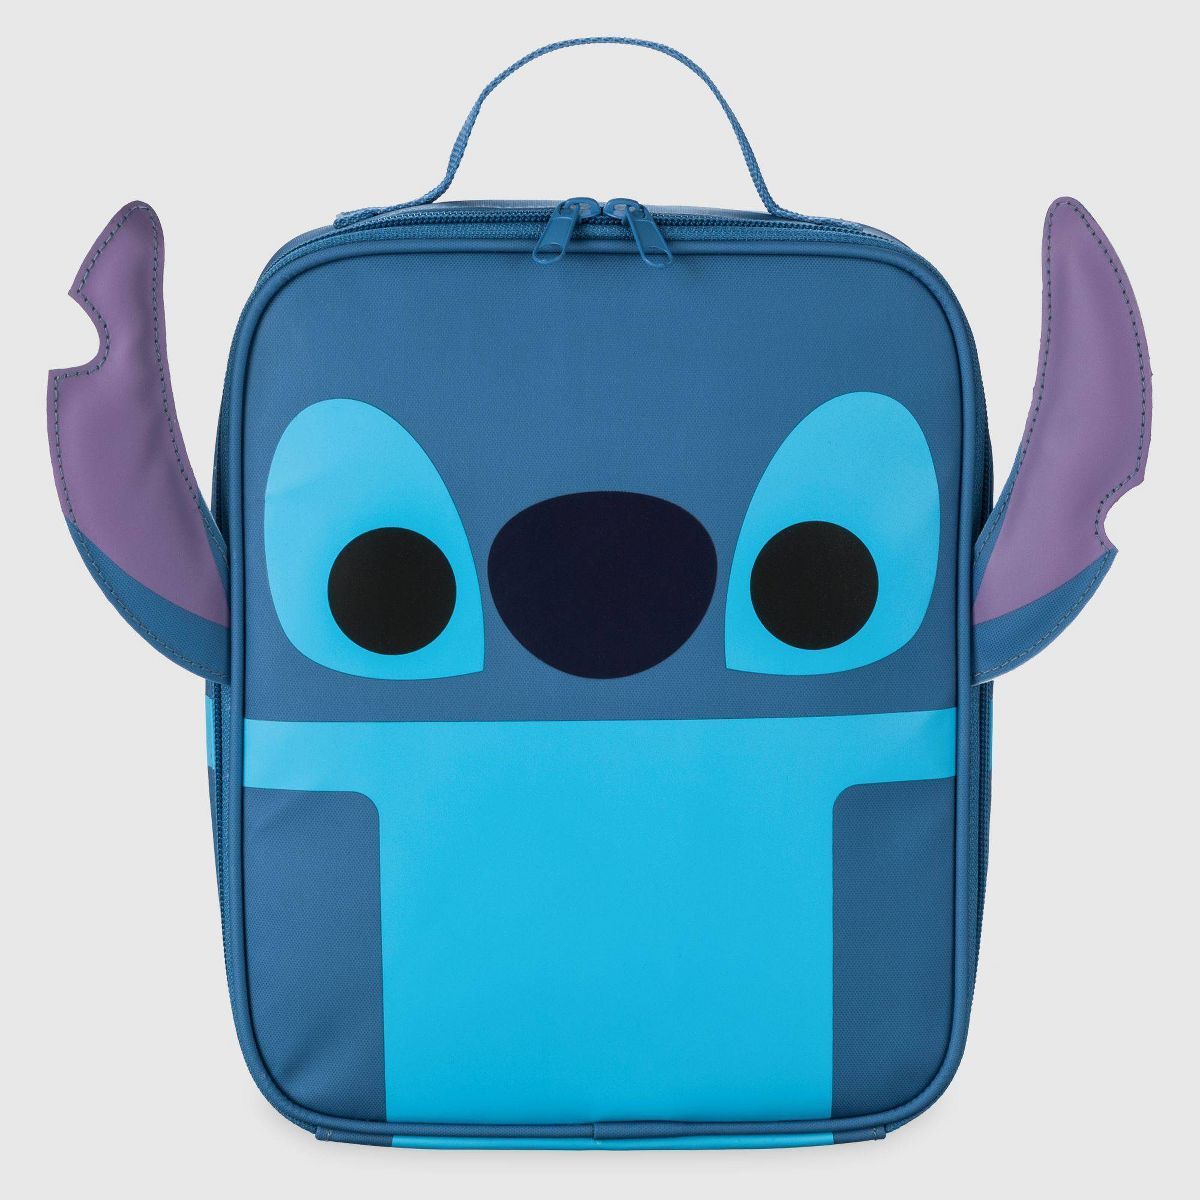 Lilo & Stitch Kids' Lunch Bag | Target